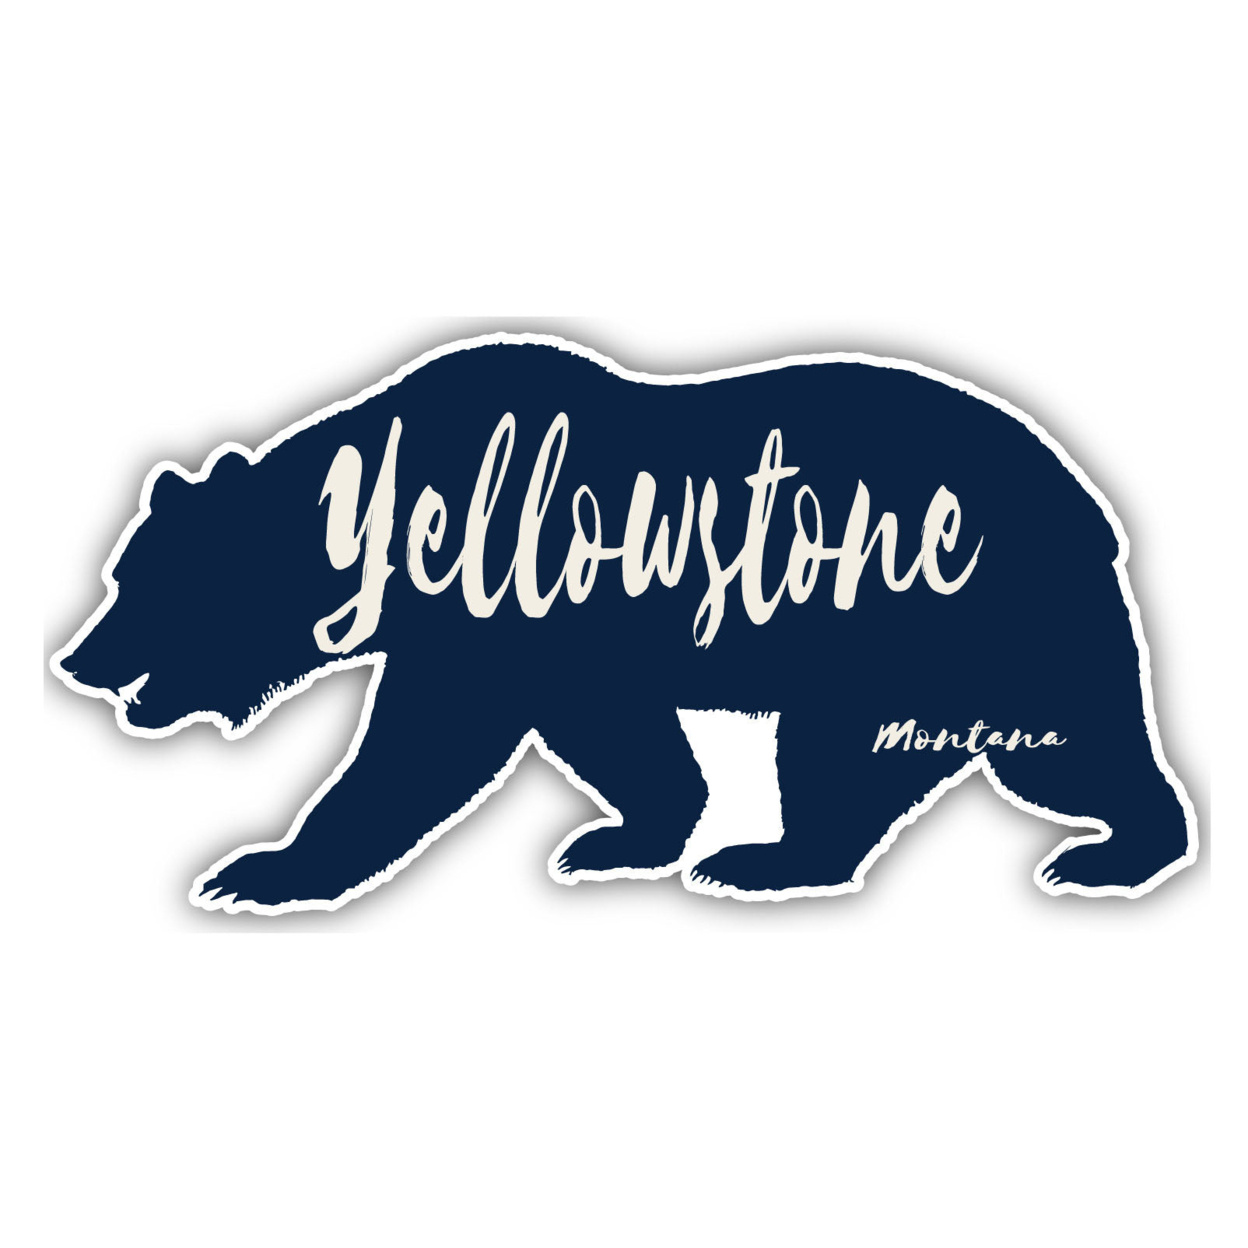 Yellowstone Montana Souvenir Decorative Stickers (Choose Theme And Size) - Single Unit, 4-Inch, Bear